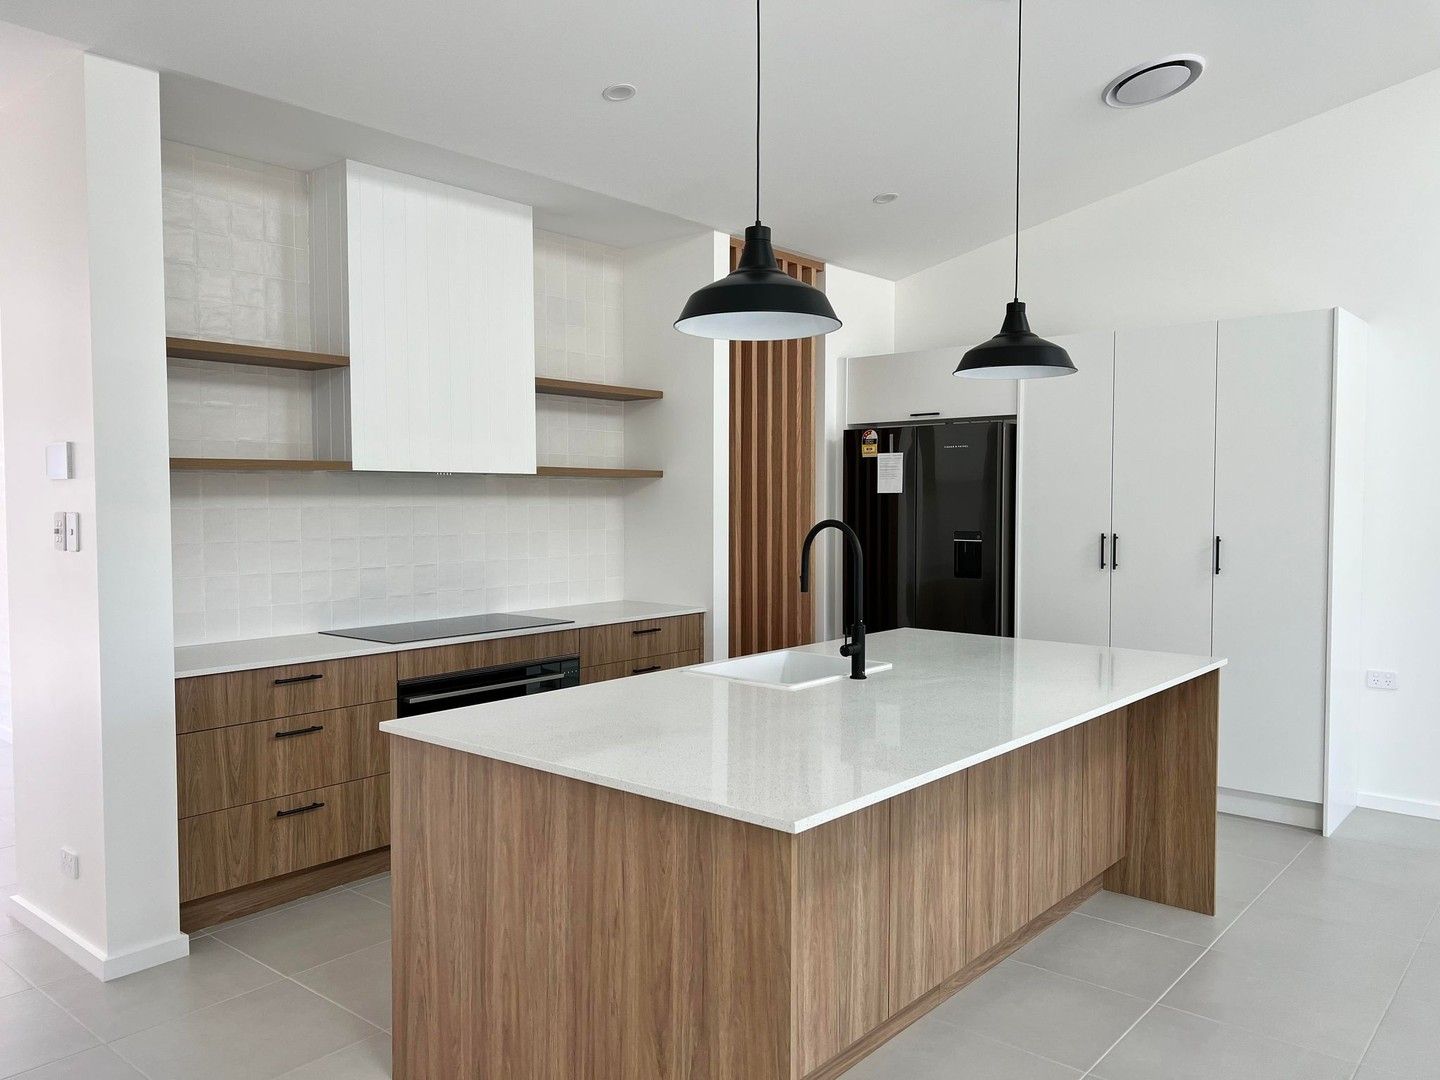 2 bedrooms Apartment / Unit / Flat in 1/23 Lewis Street MUDGEE NSW, 2850